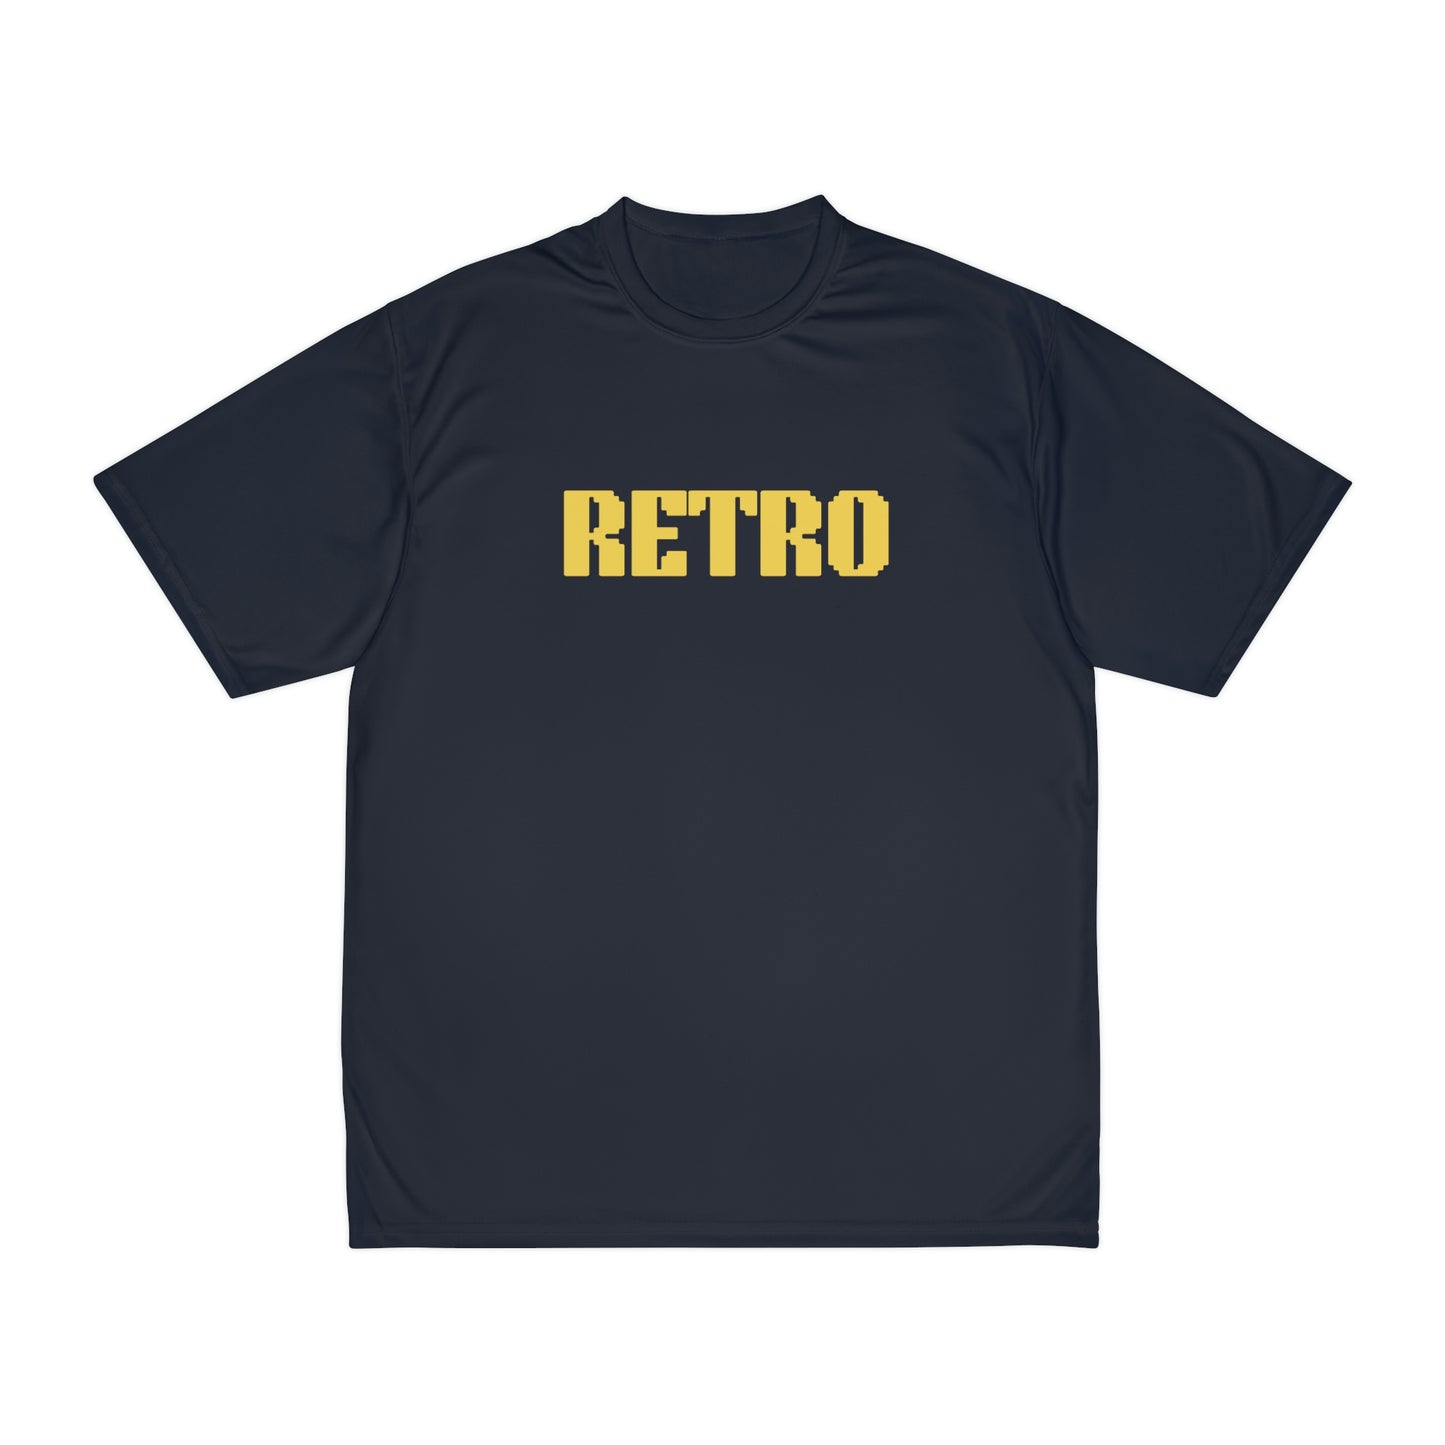 RETRO - Men's Performance T-Shirt